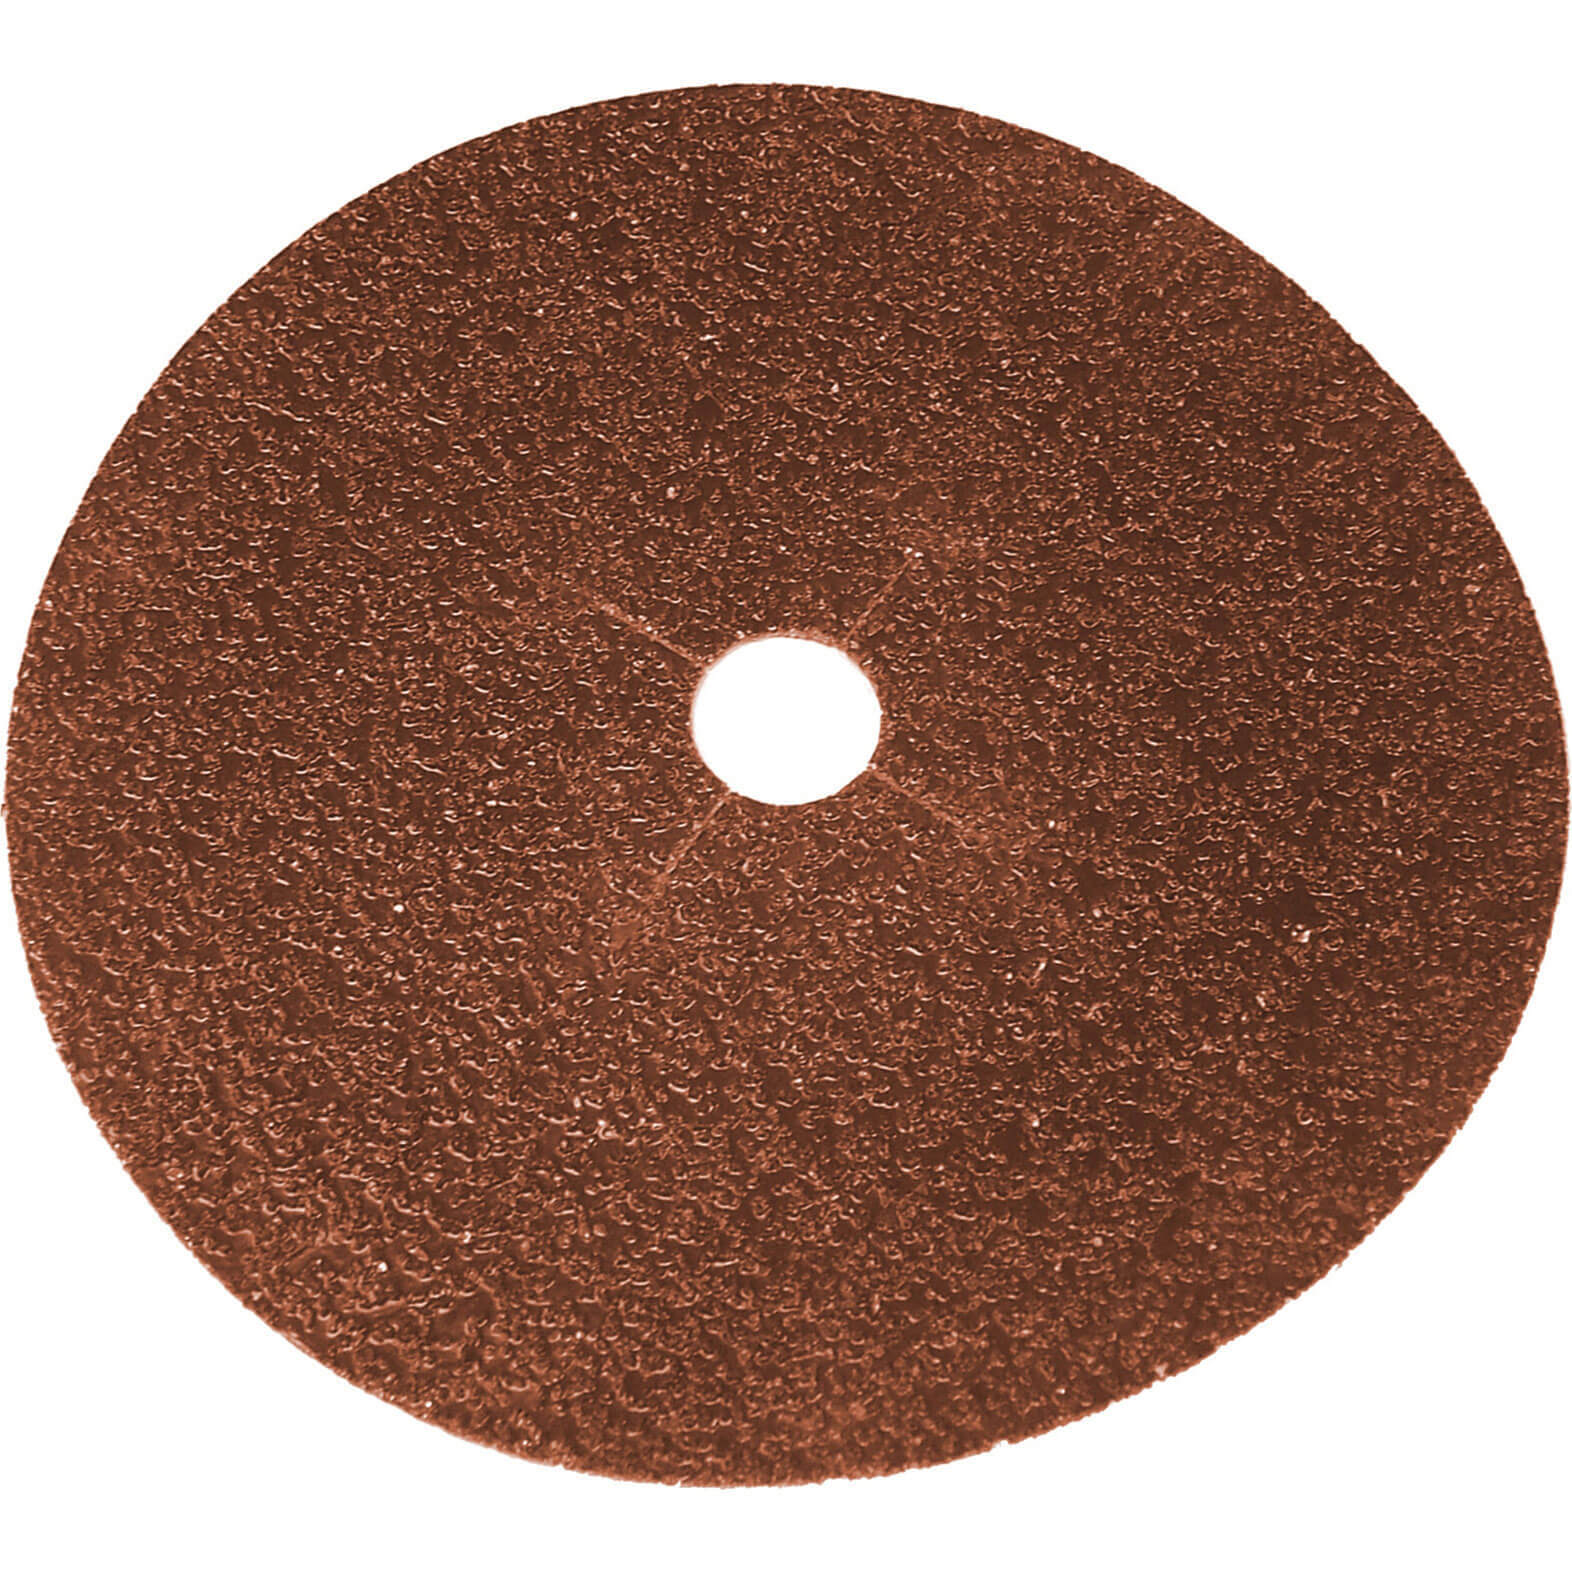 Photos - Abrasive Wheel / Belt Faithfull Aluminium Oxide Sanding Discs 178mm 60g ADFS17860 